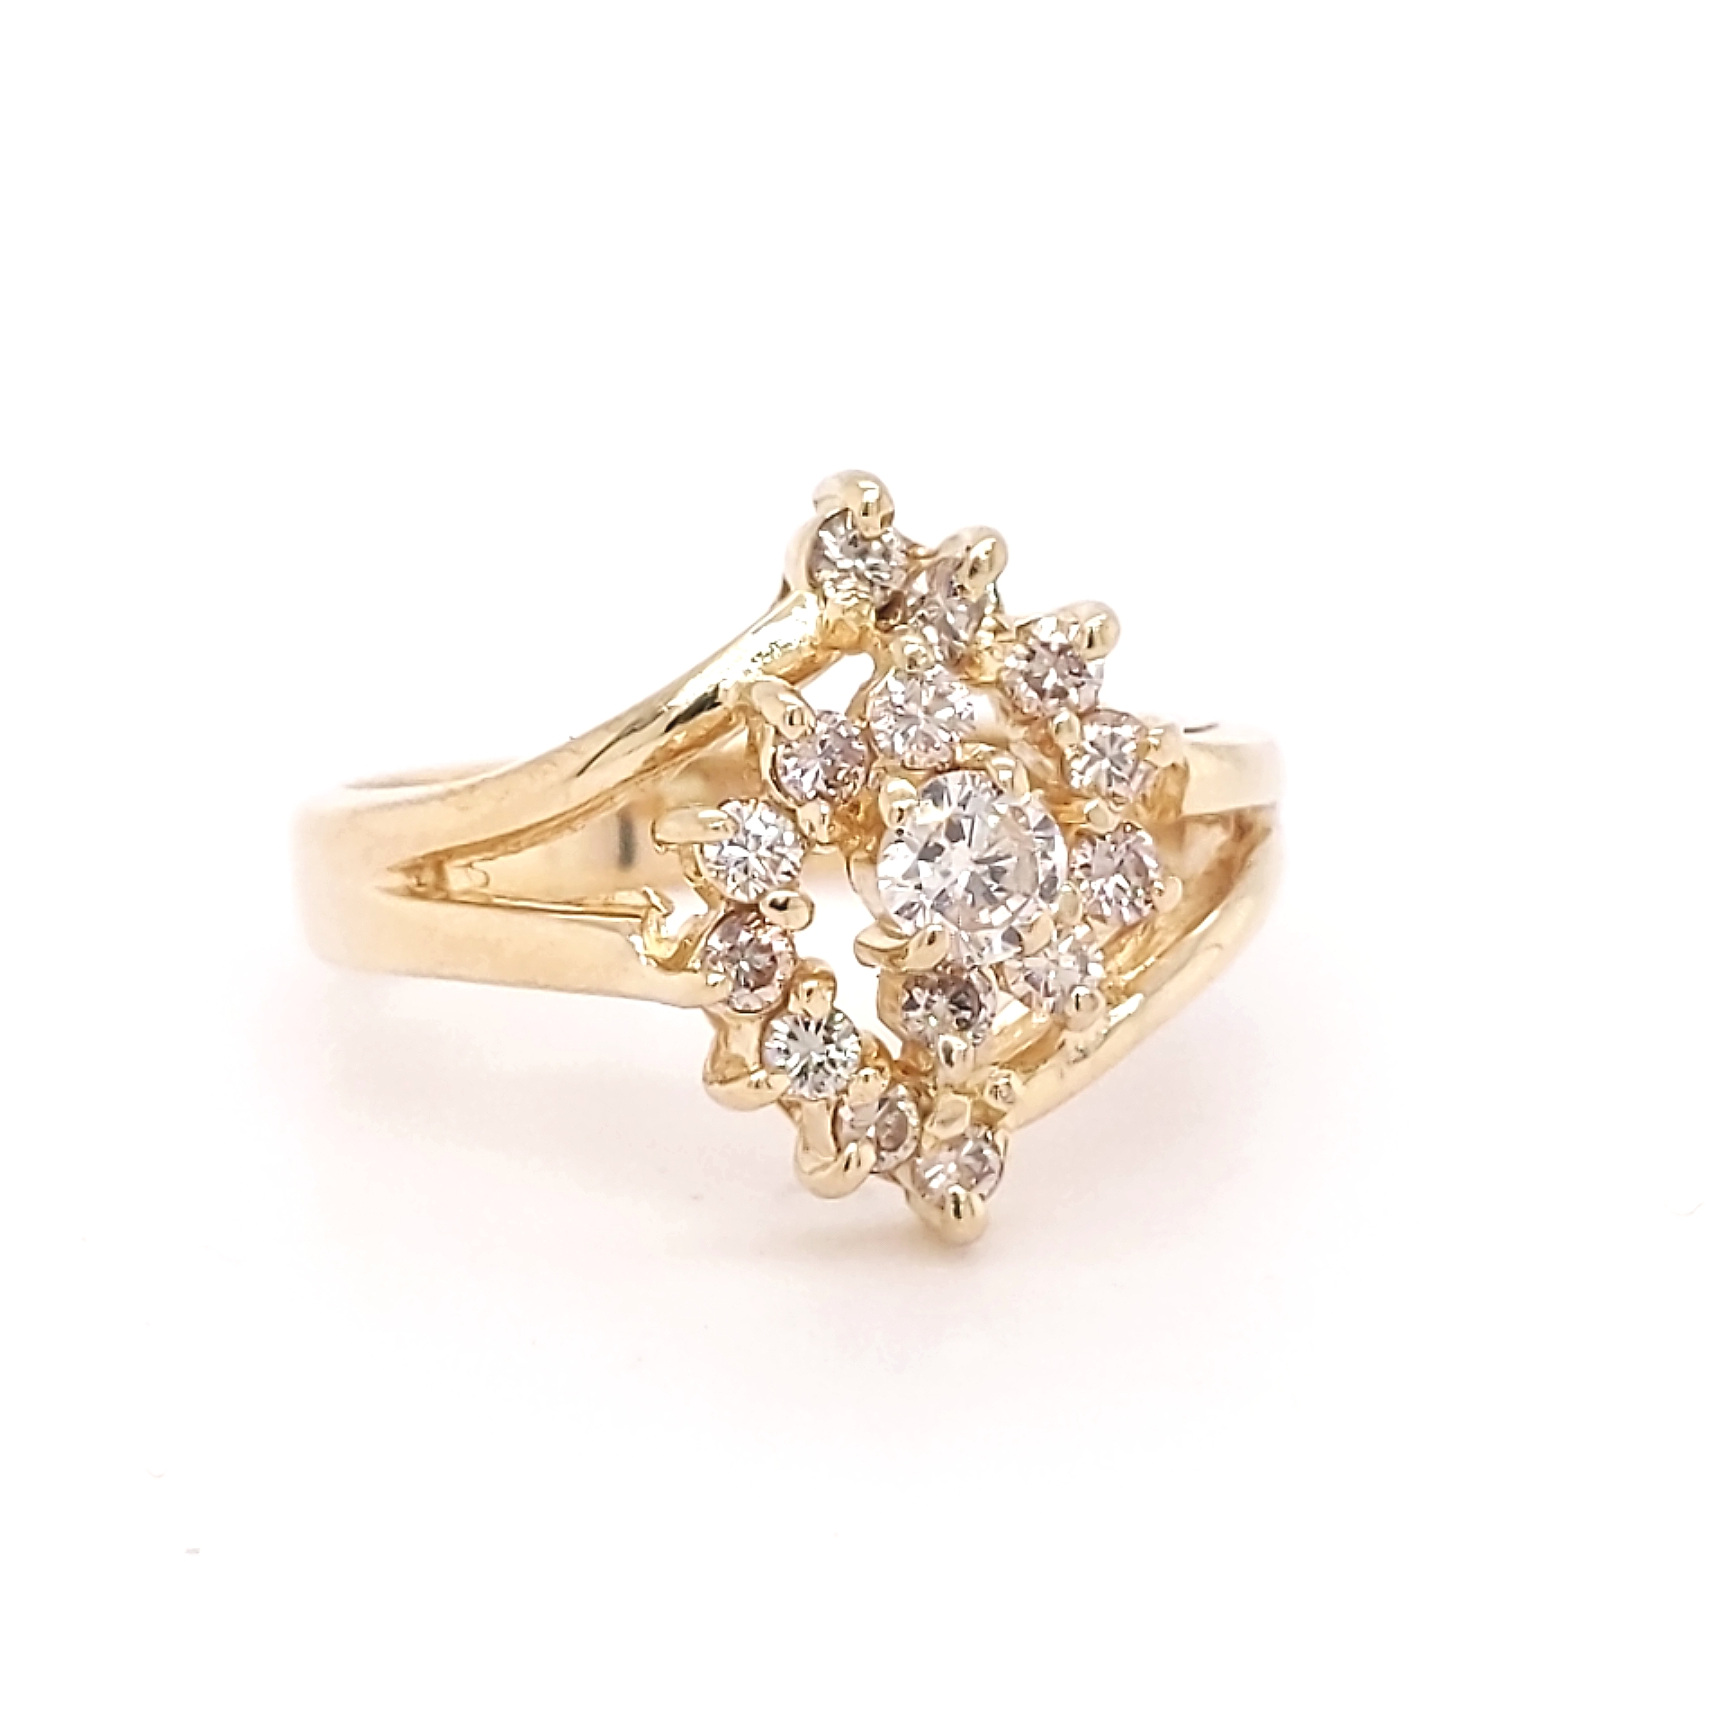 14K Yellow Gold .40ctw RBC Diamond Fashion Ring finger size 6.5